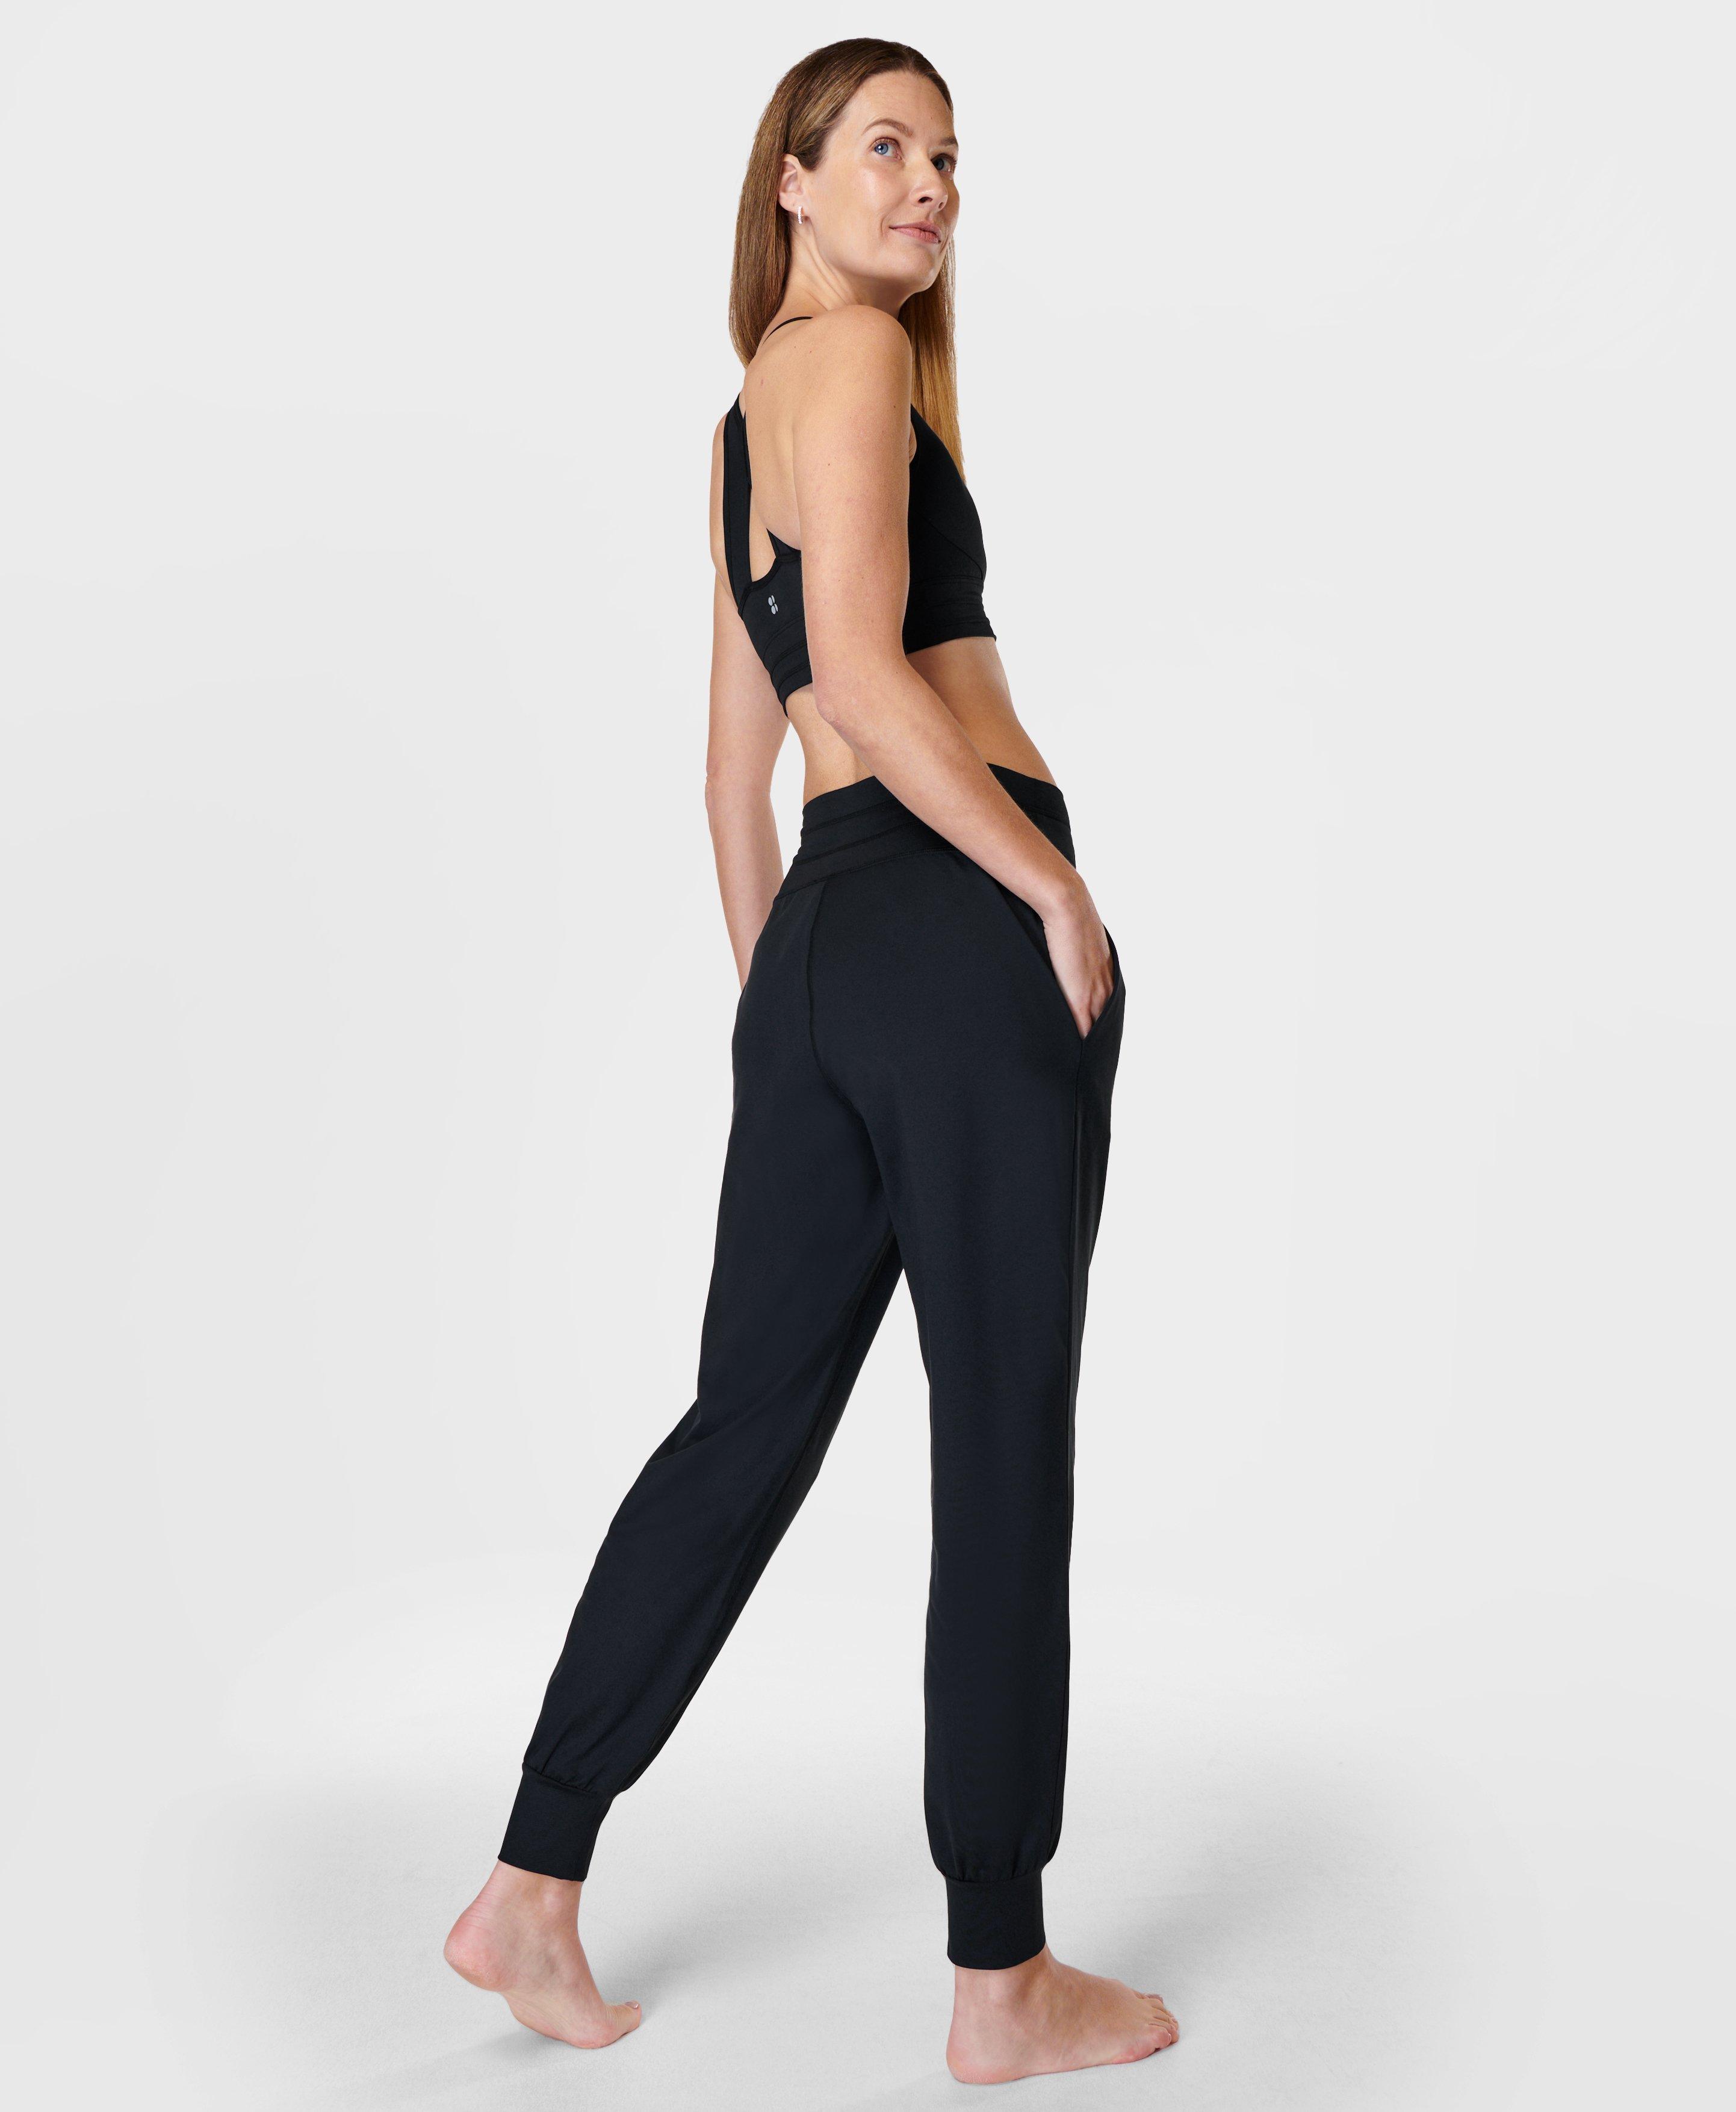 Gaia Yoga Pants - Black | Women's Trousers & Yoga Pants | Sweaty Betty